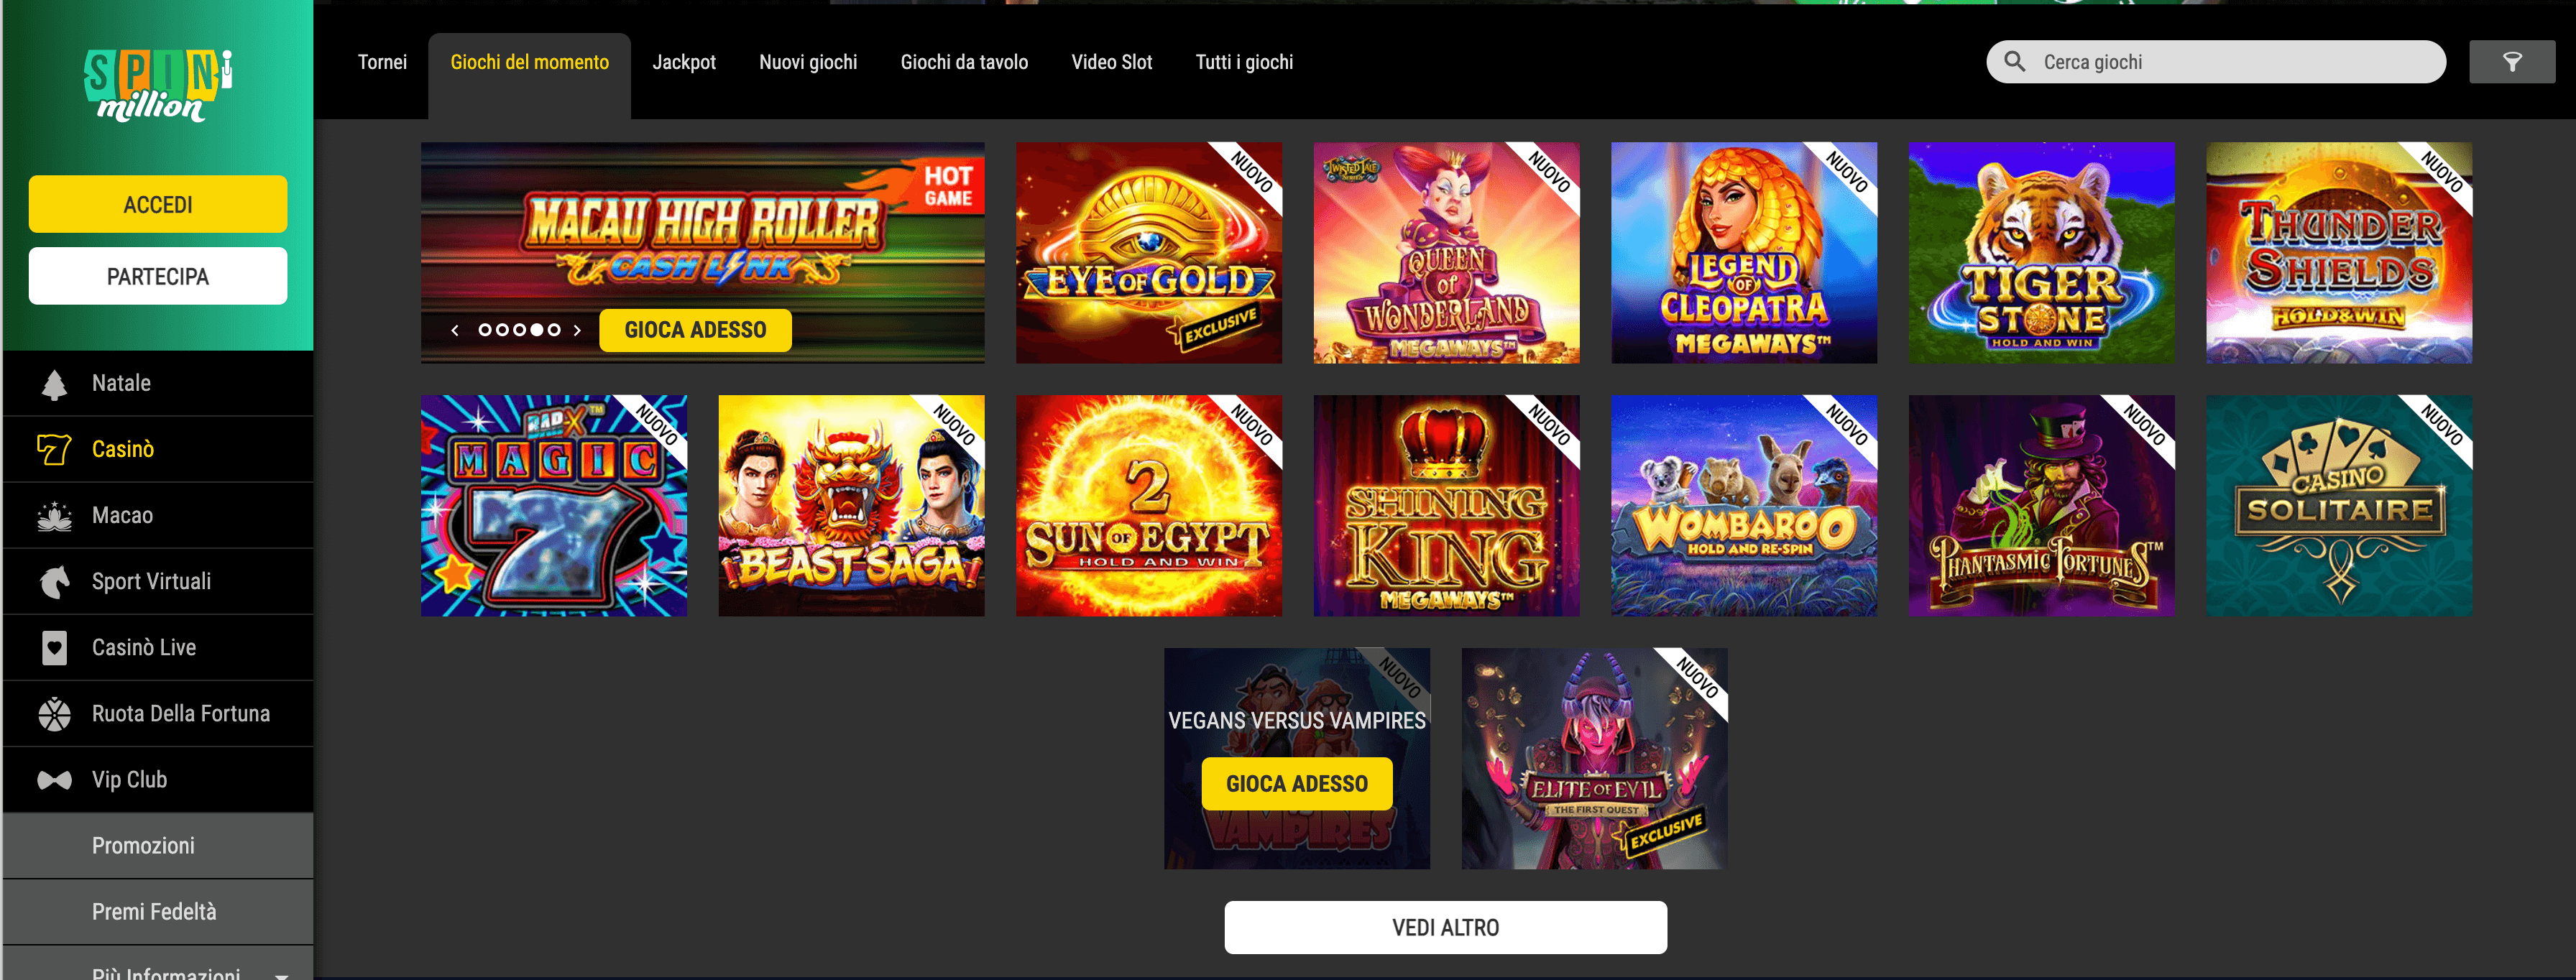 spin million casino giochi slot